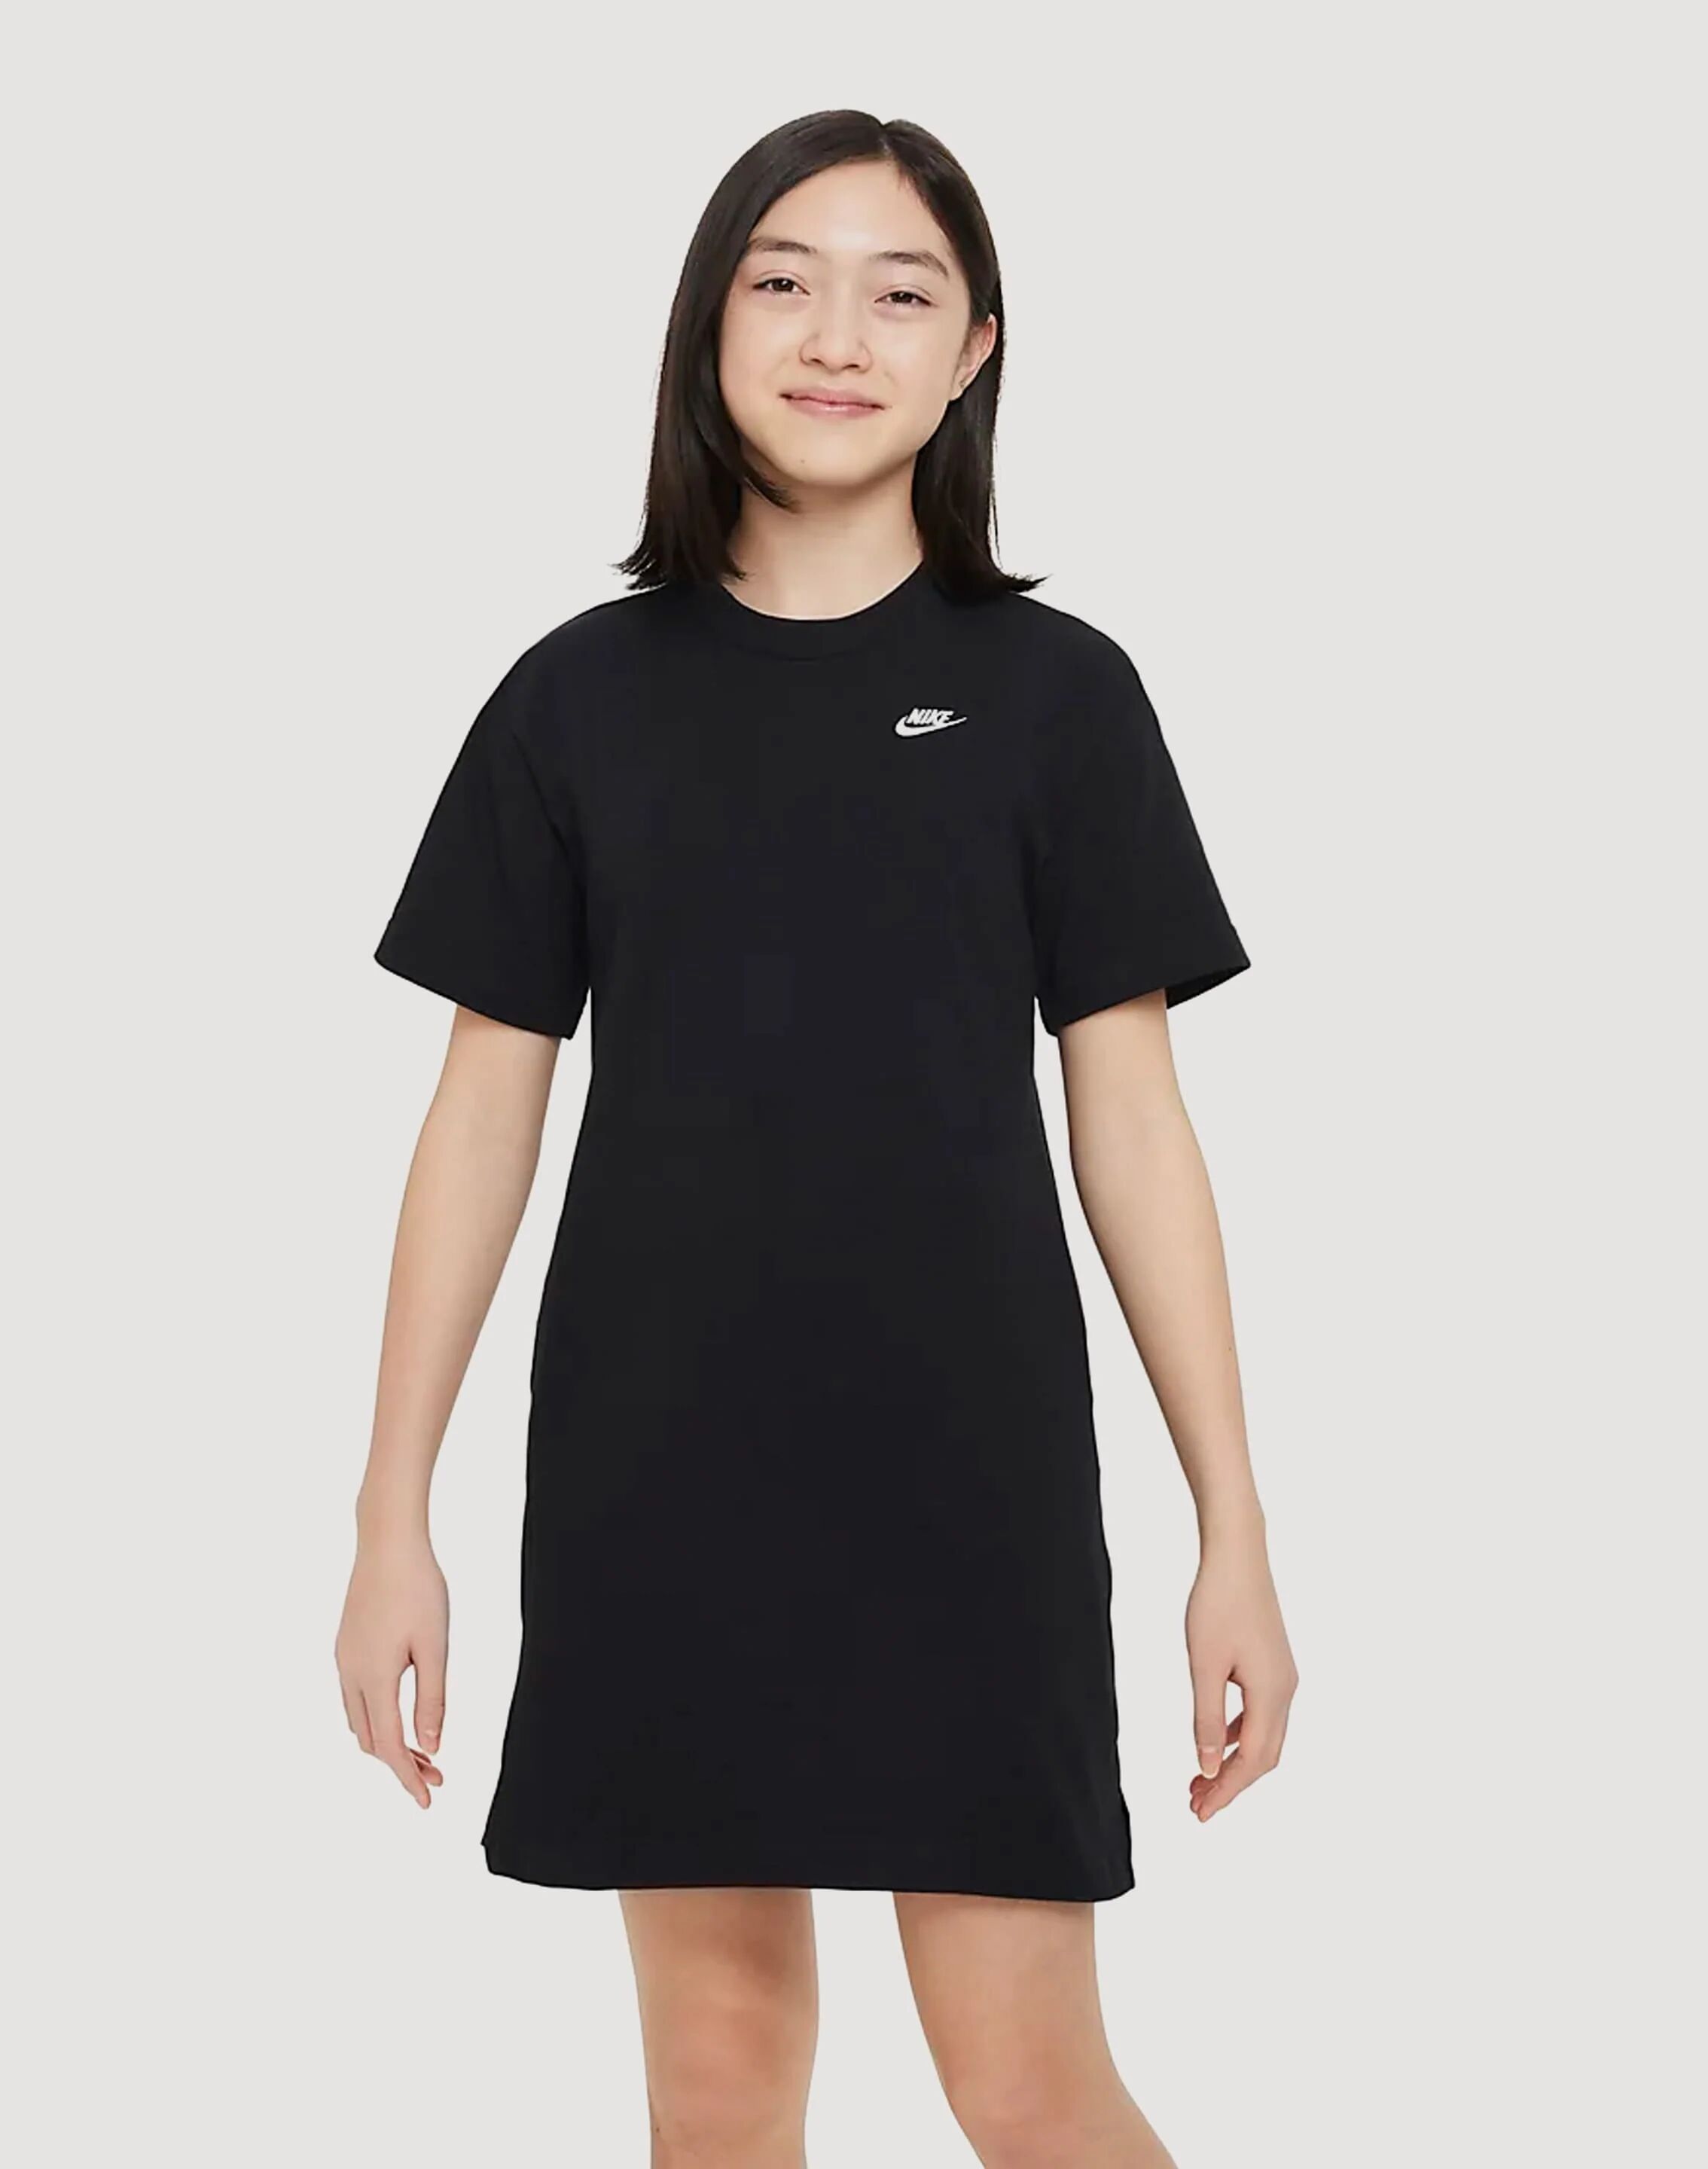 Nike T-Shirt Dress Grade-School  - Black - Size: XLG